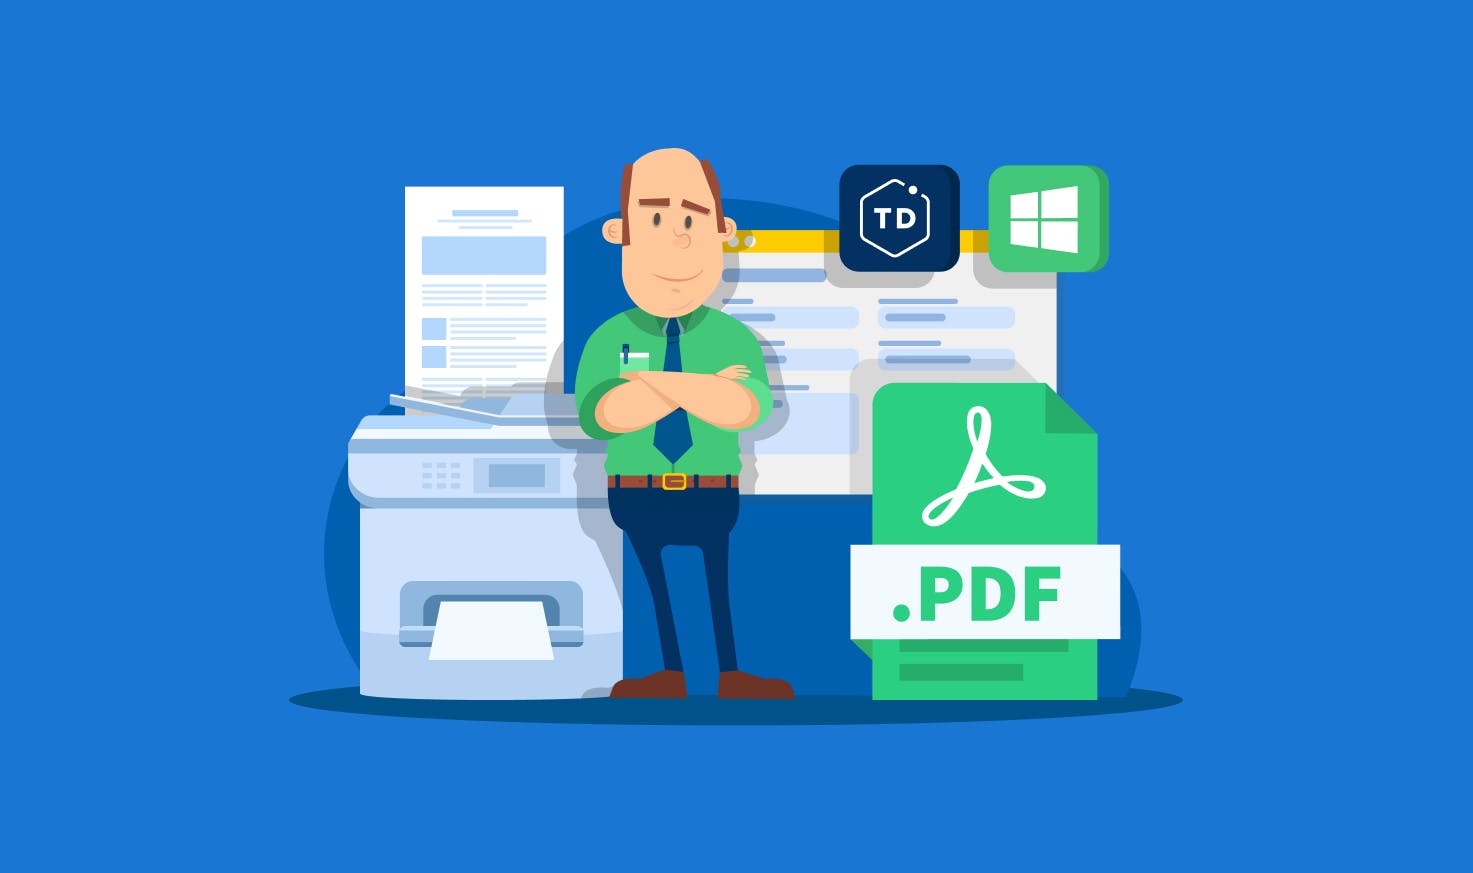 Windows Desktop App Update: Introducing TaxDome PDF Scanner